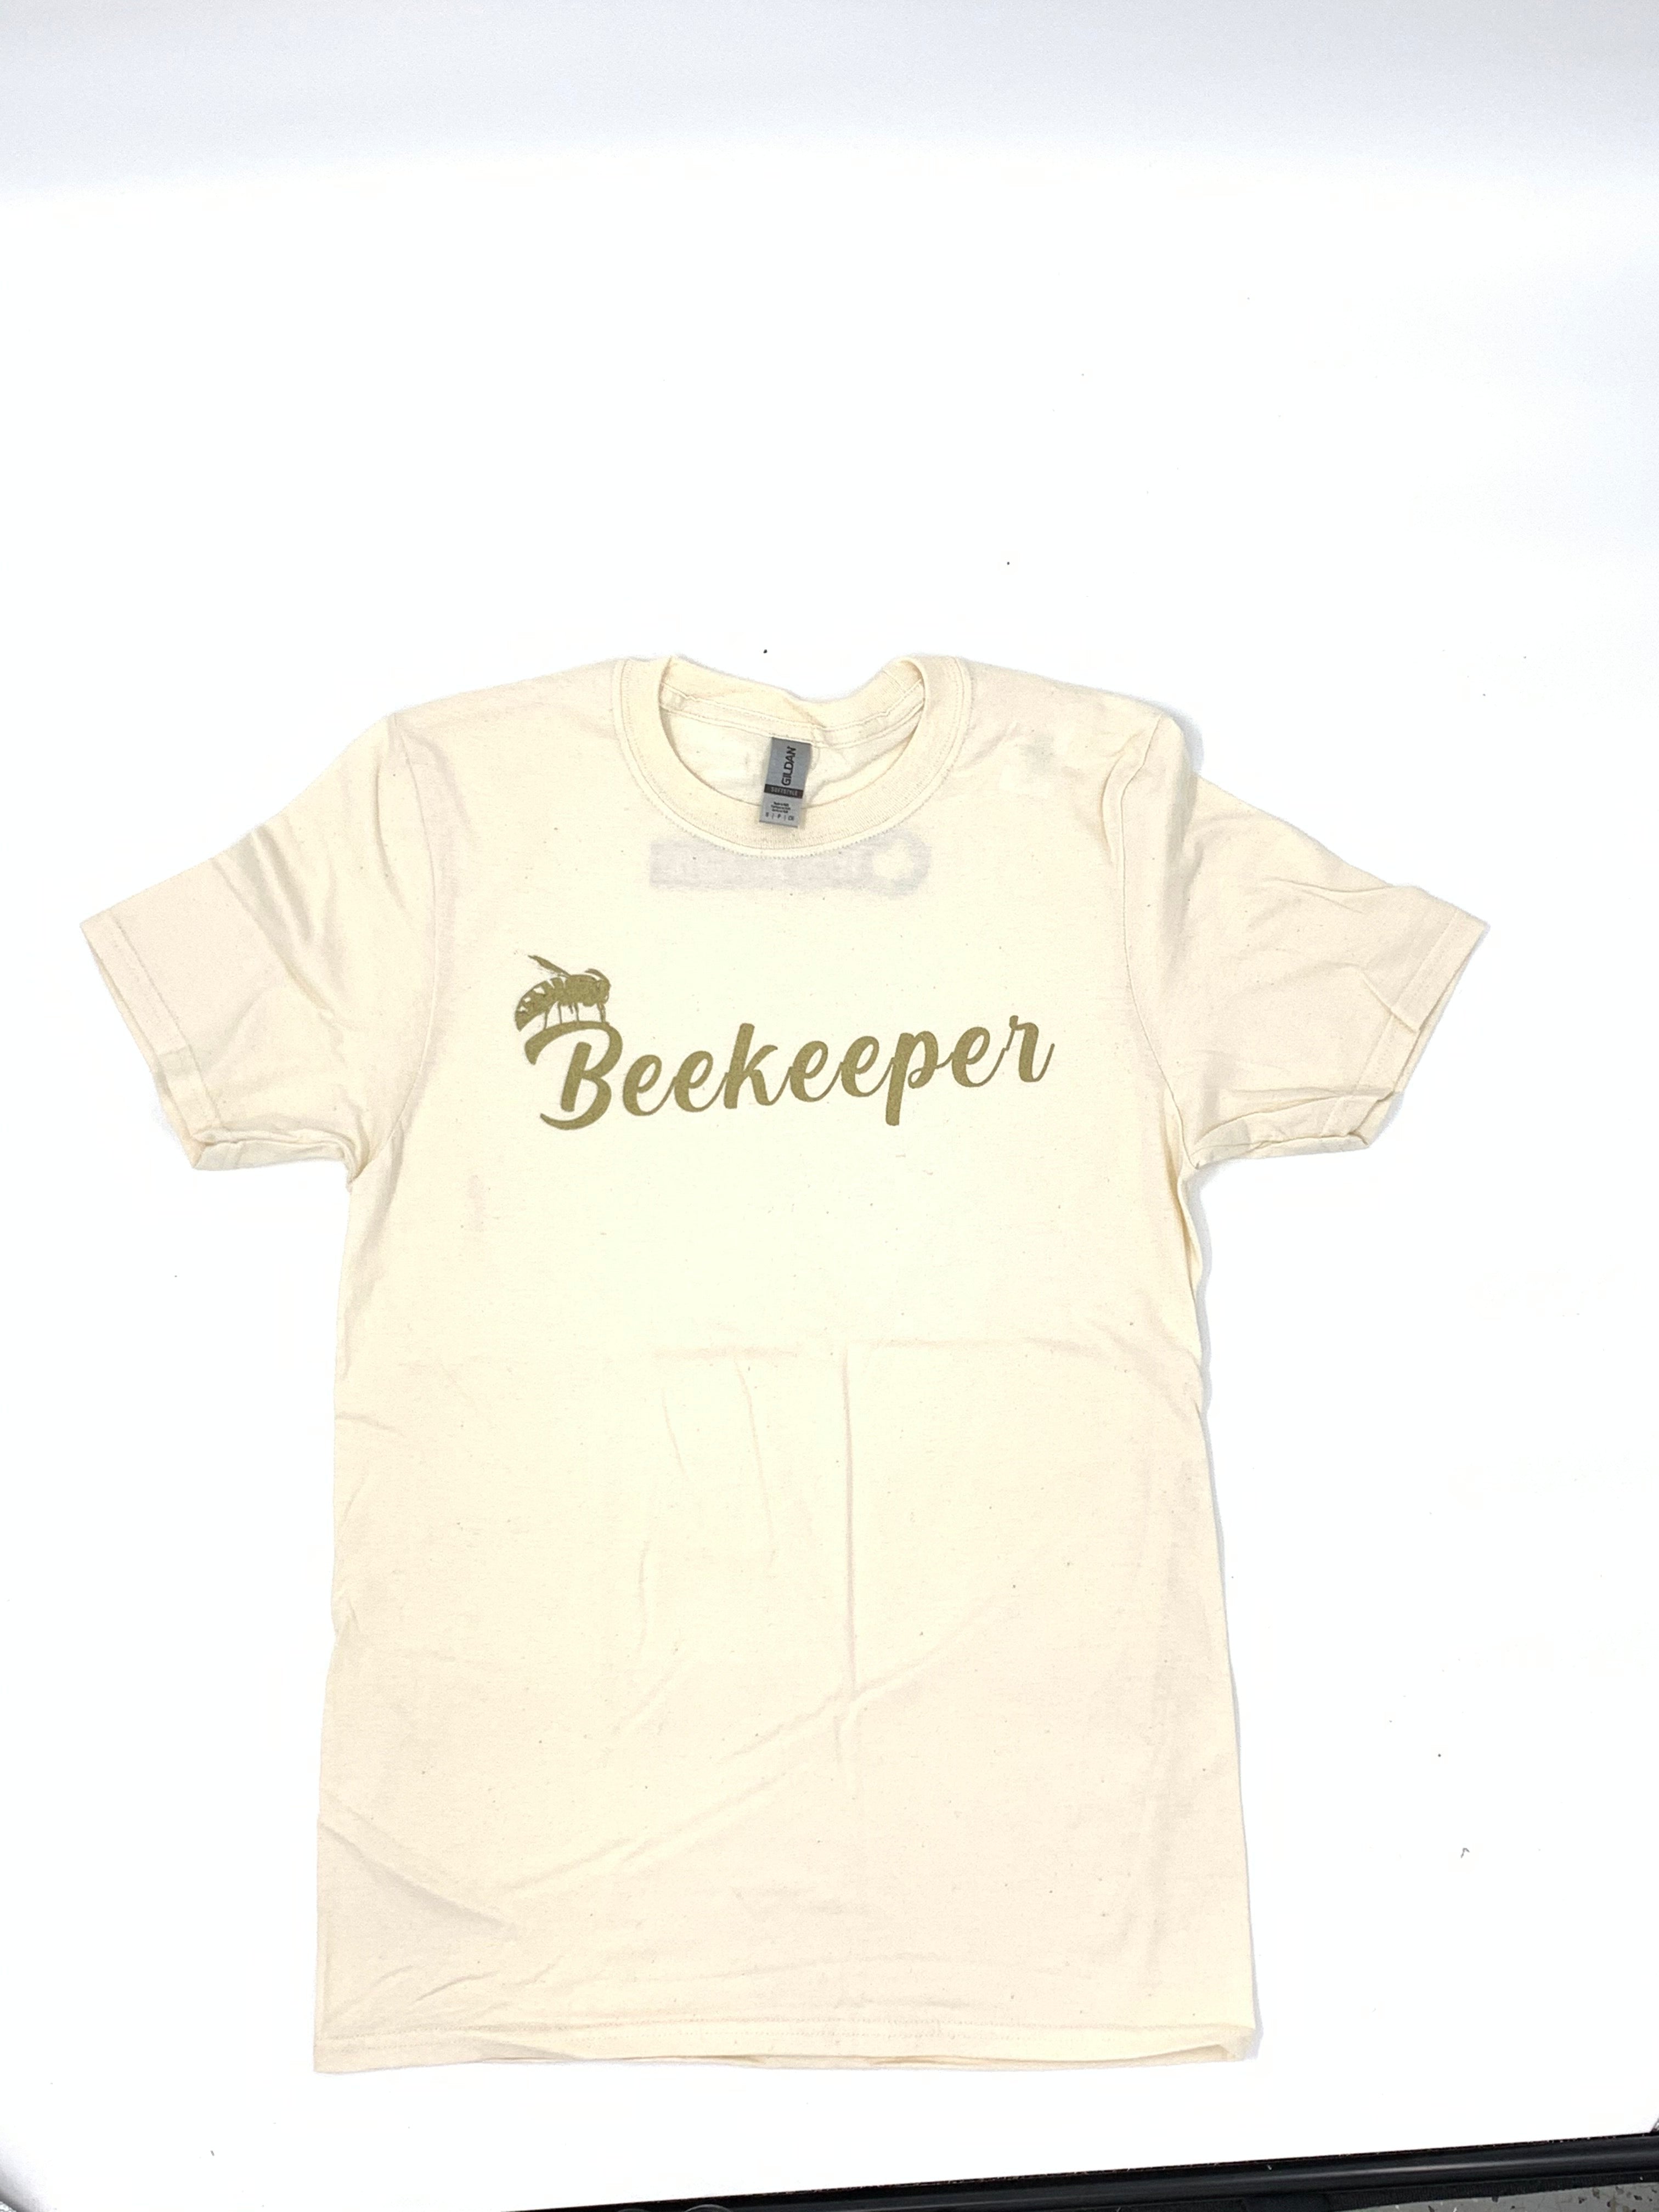 Beekeeper T Shirt with Buzzworthy Design